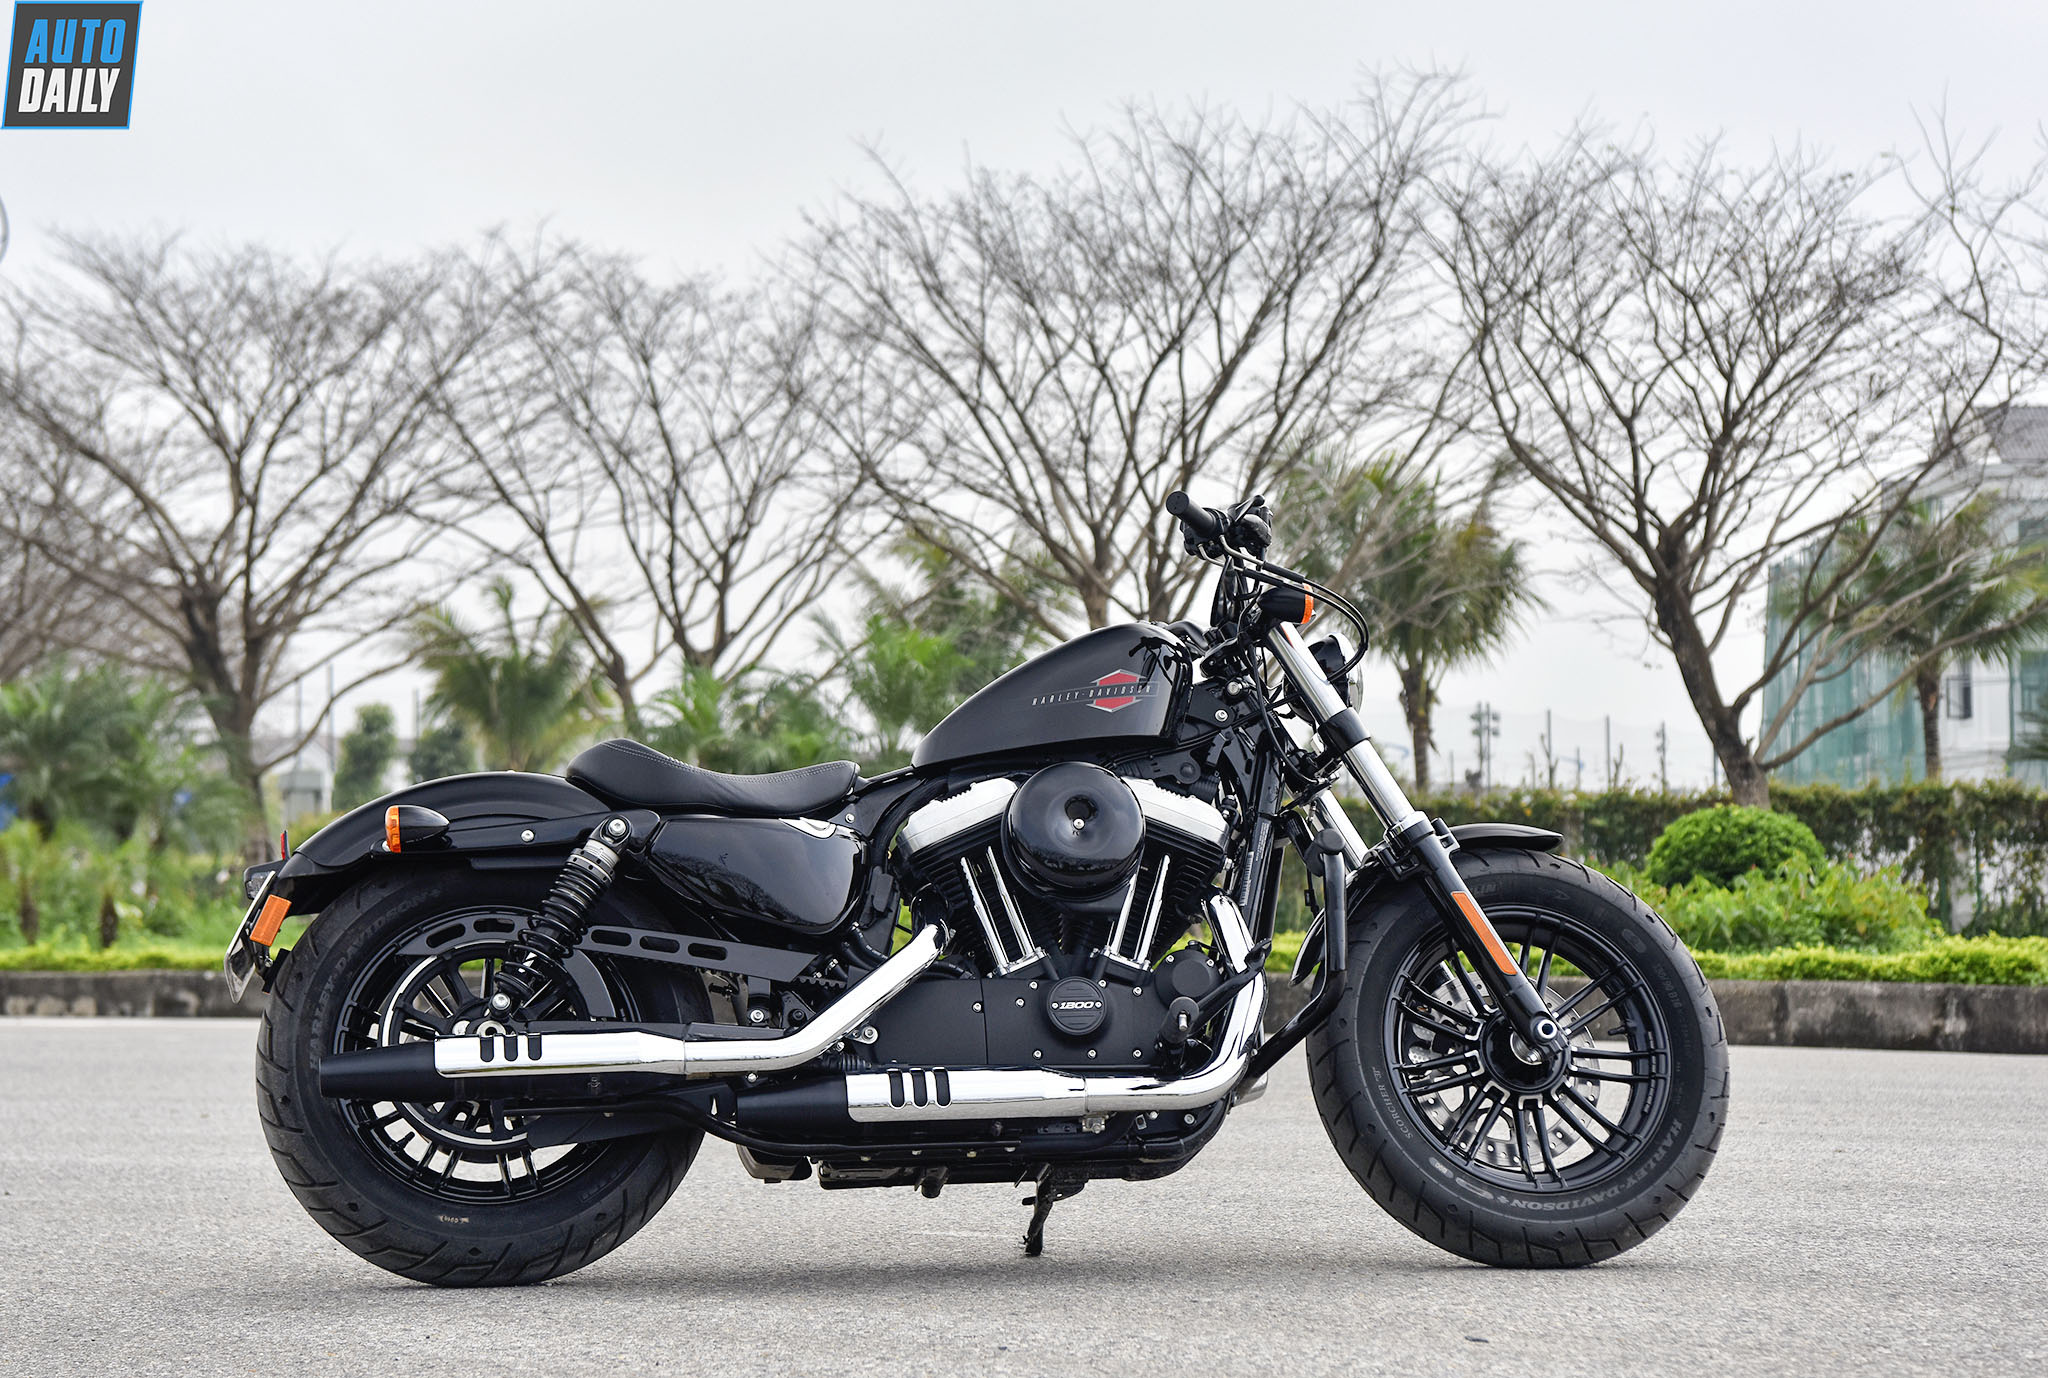 Harley-Davidson 48 2019 Review: Reasonably priced American motorcycles for Vietnamese bikers harley-dsc3318-copy-copy.jpg